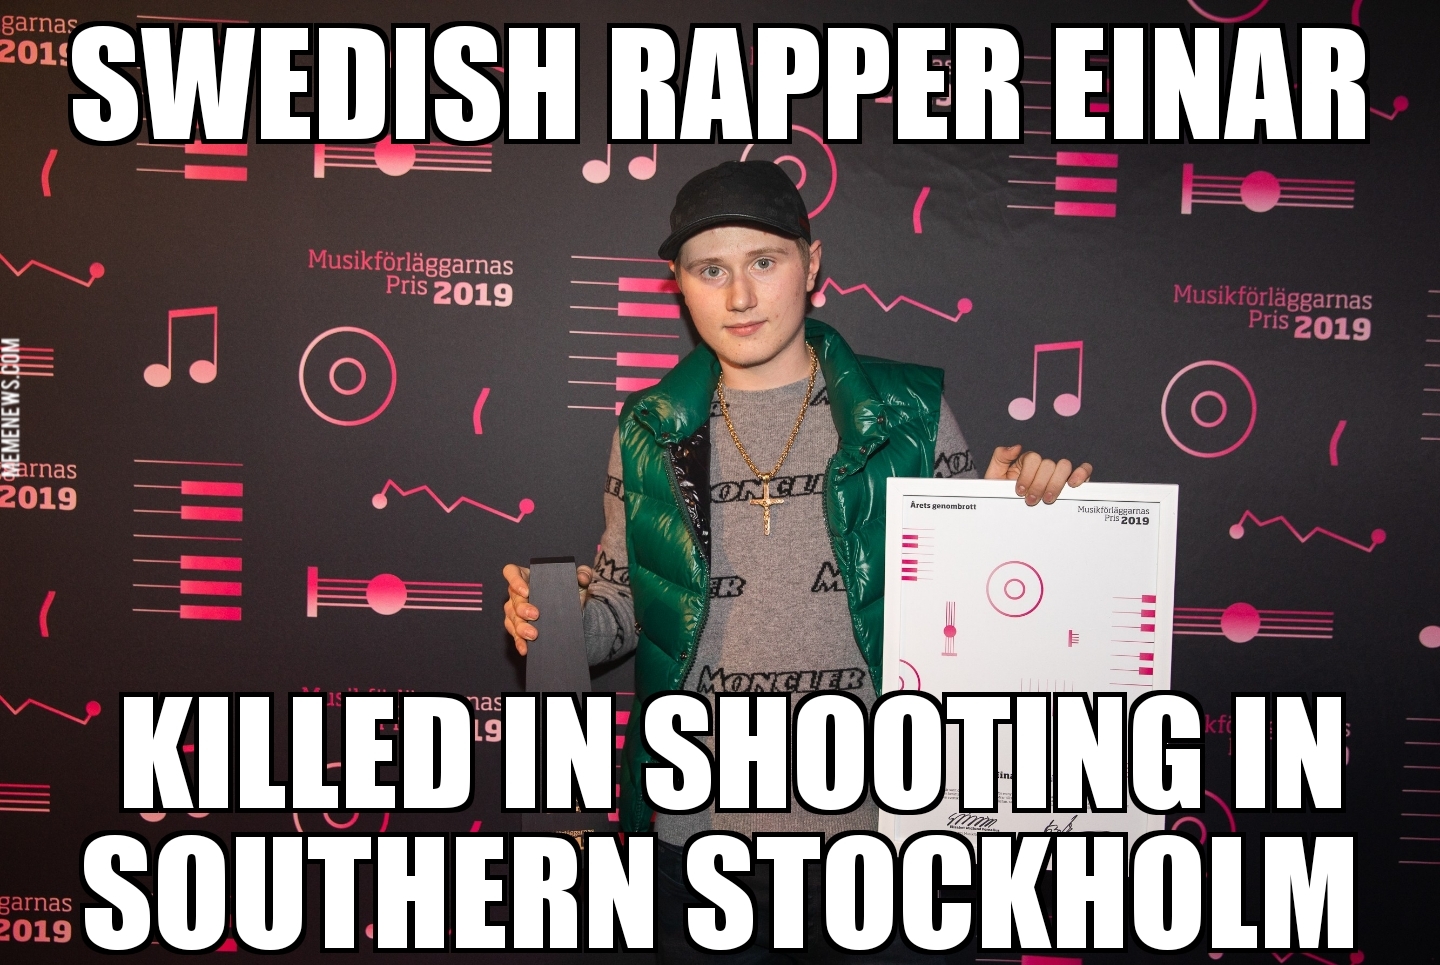 Rapper Einar killed